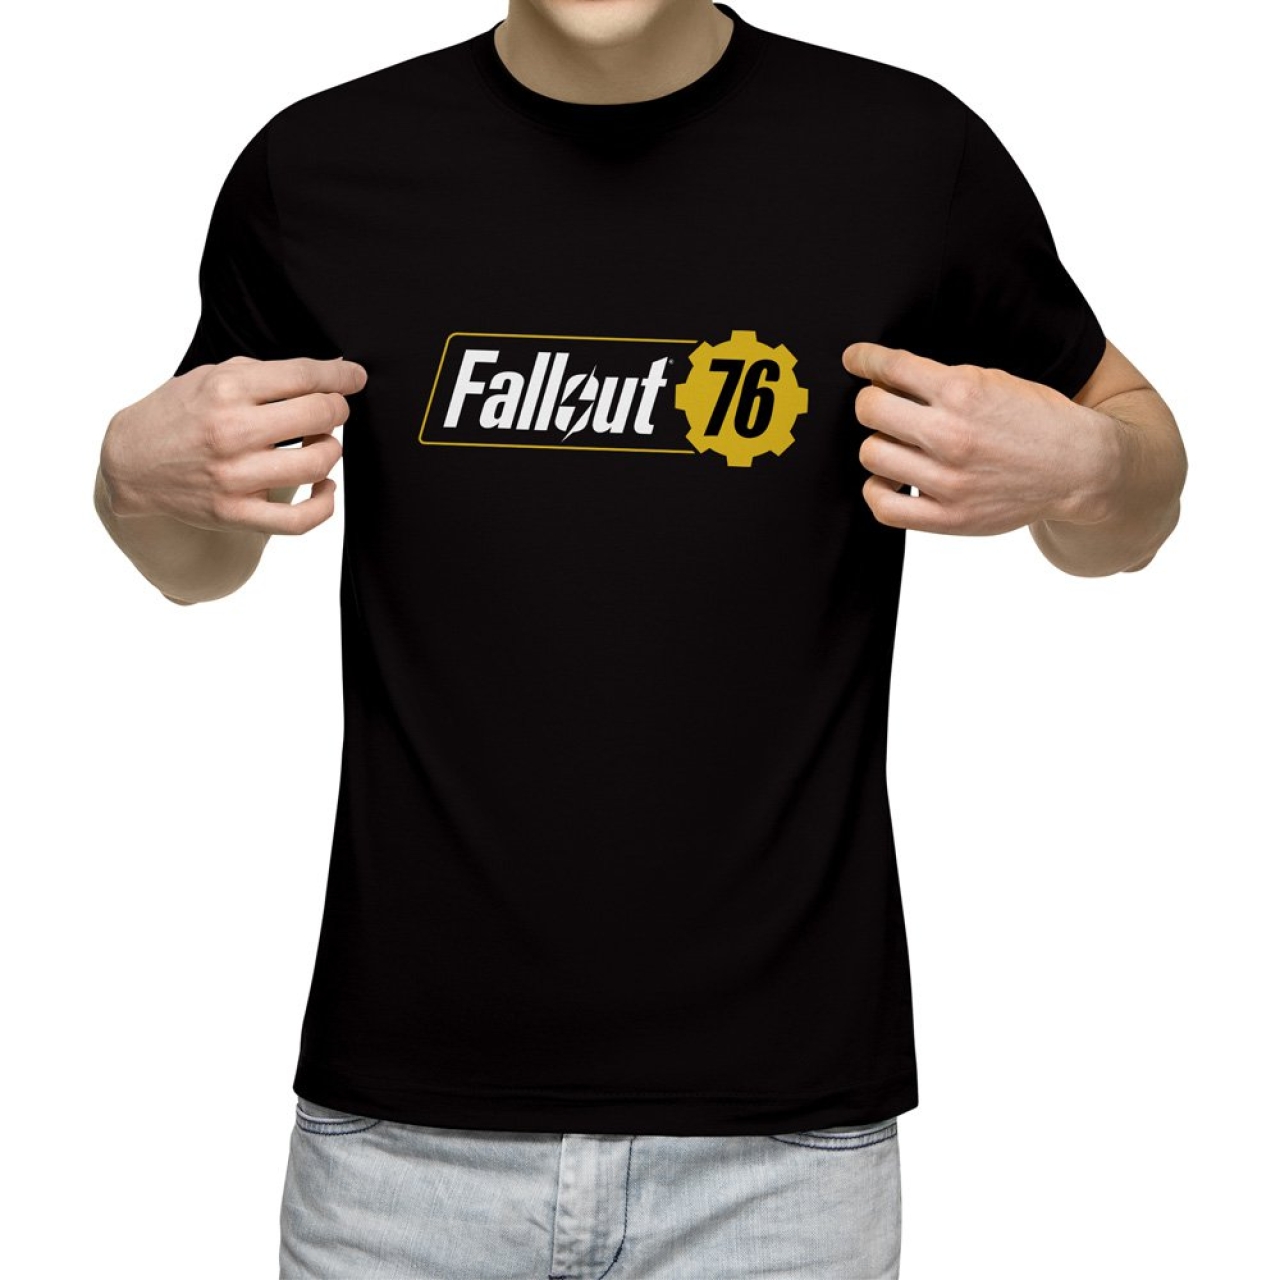 تیشرت آستین کوتاه مردانه یقه گرد مشکی طرح Fallout 76 کد 10803